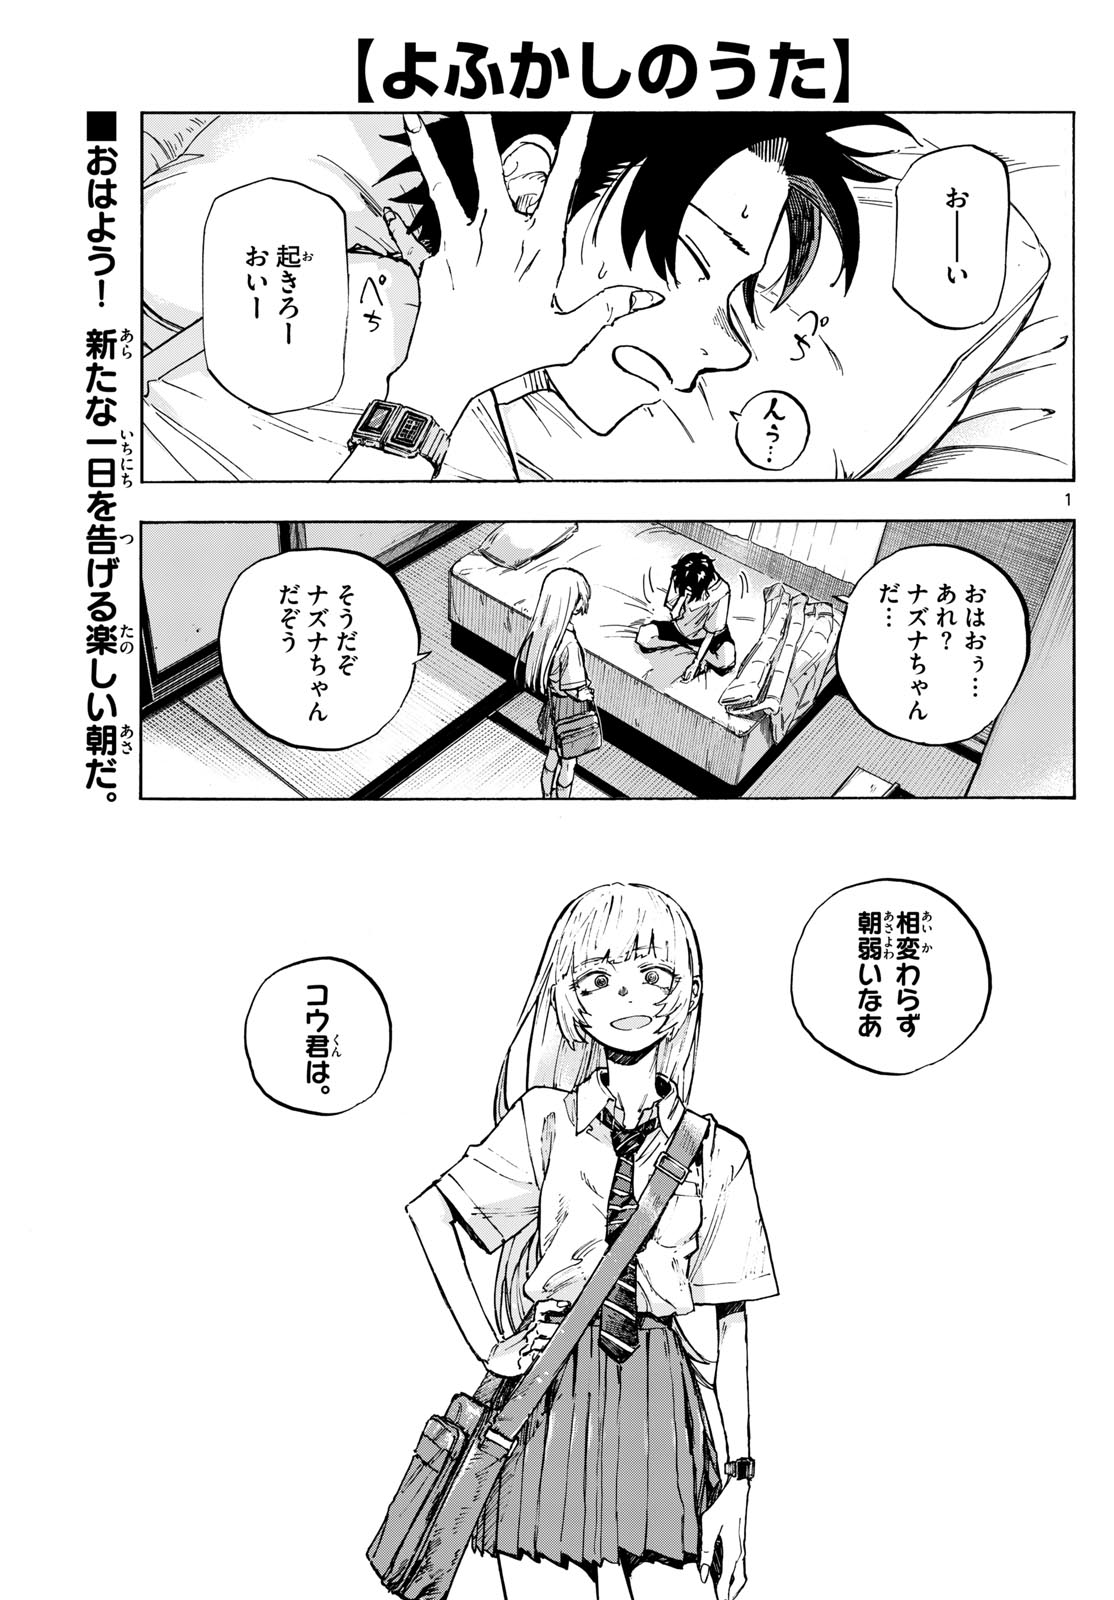 Yofukashi no Uta - Chapter 195 - Page 1